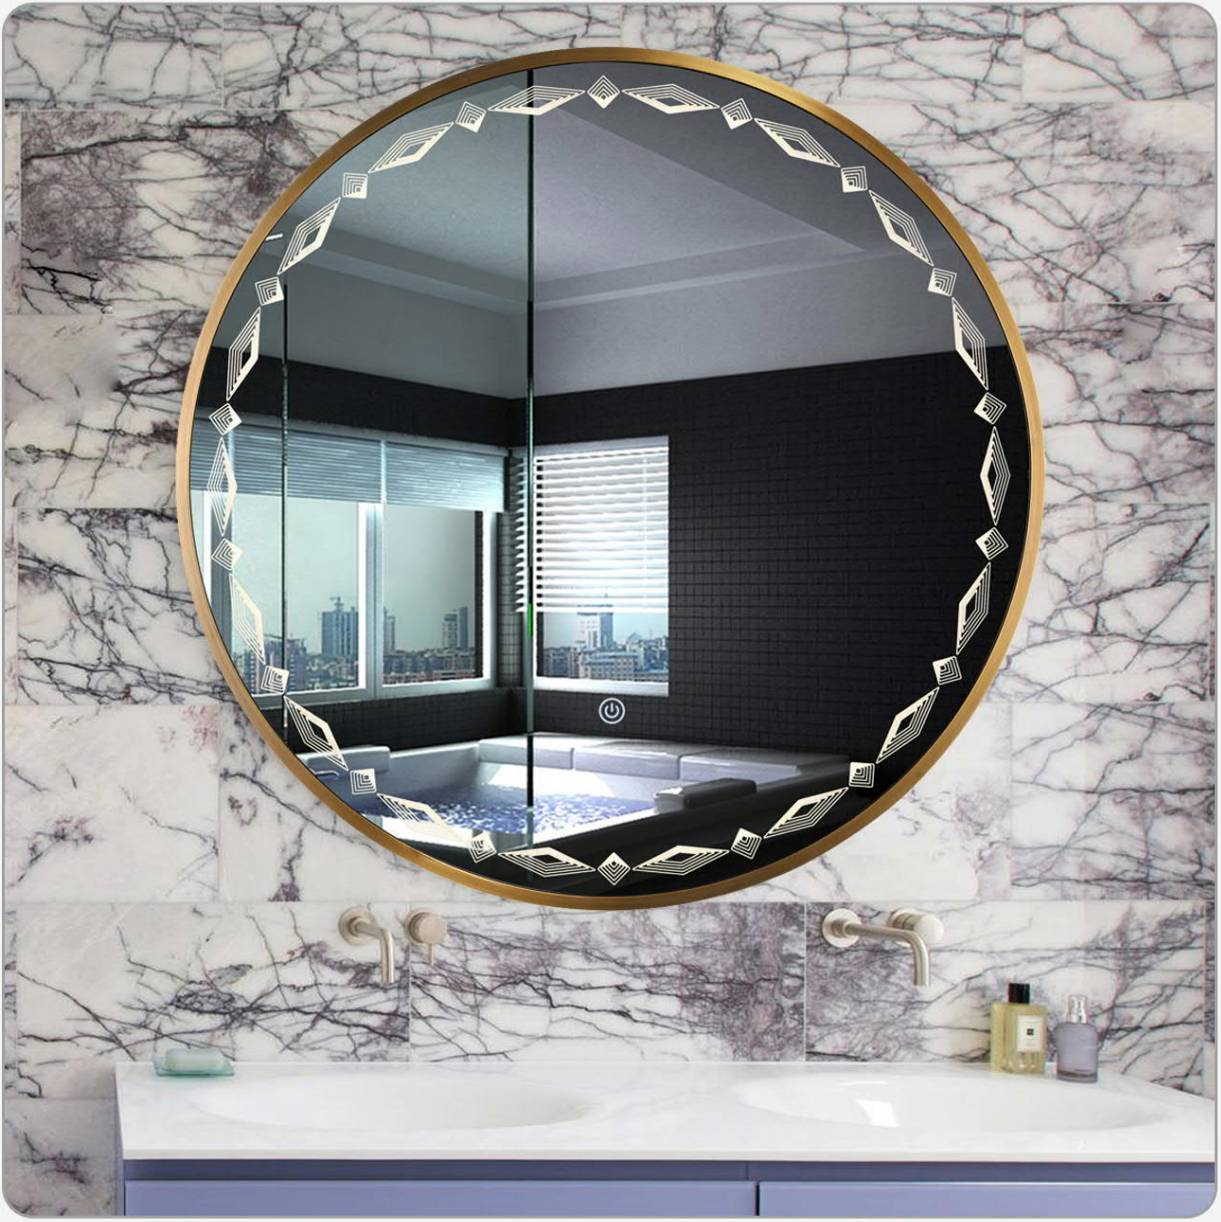 ZHUOTAI LED Round Mirror, Wall Mounted Bathroom Vanity Mirror with Metal Frame, Smart Anti-Fog Mirror Dimmable Circle Makeup Mirror, IP66 Waterproof CRI 95+ 3000-6500K CT, Gold